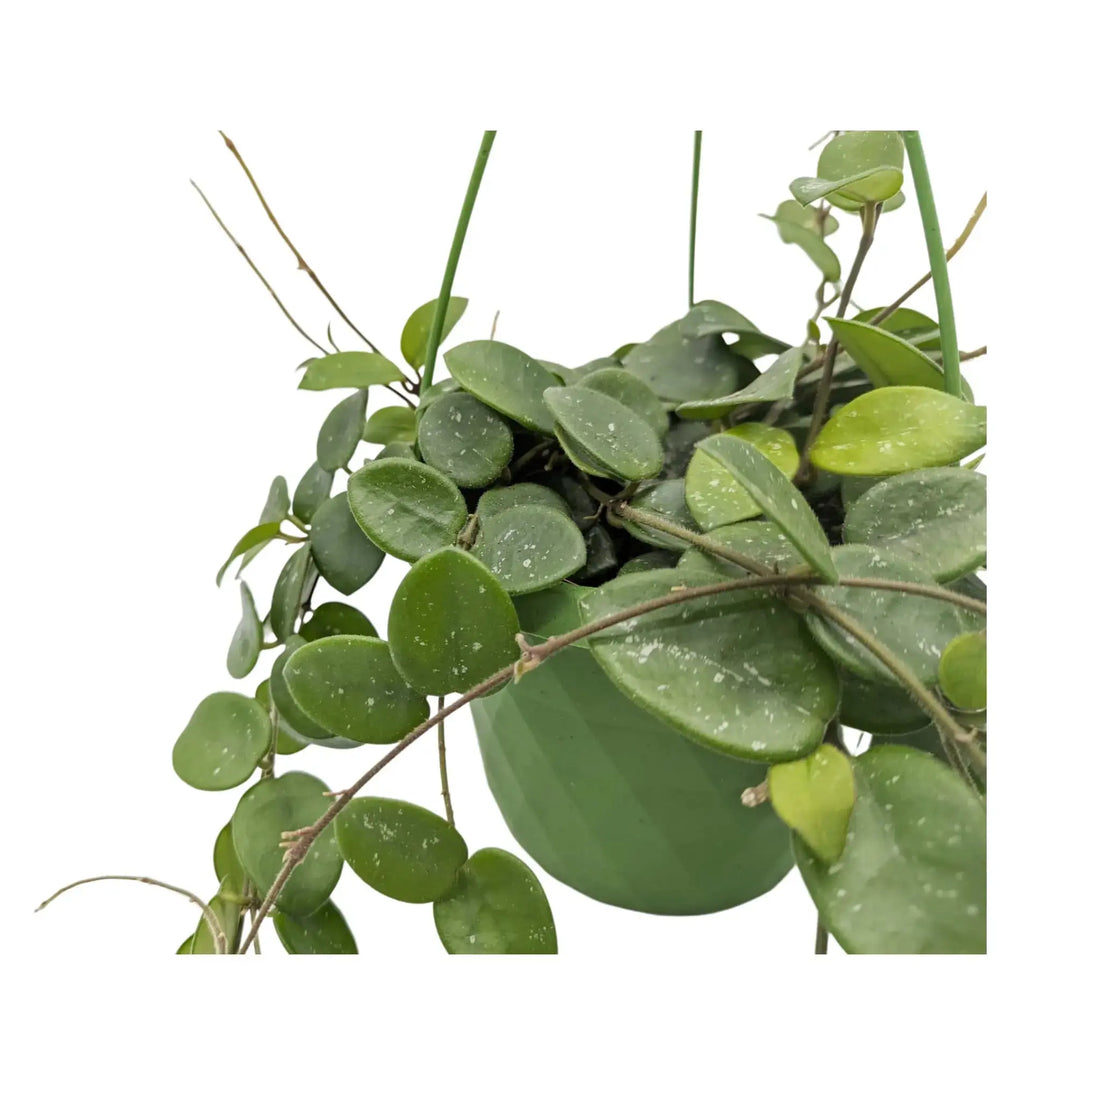 Hoya Mathilde Hanging Plant - Sweetheart Hoya Leaf Culture